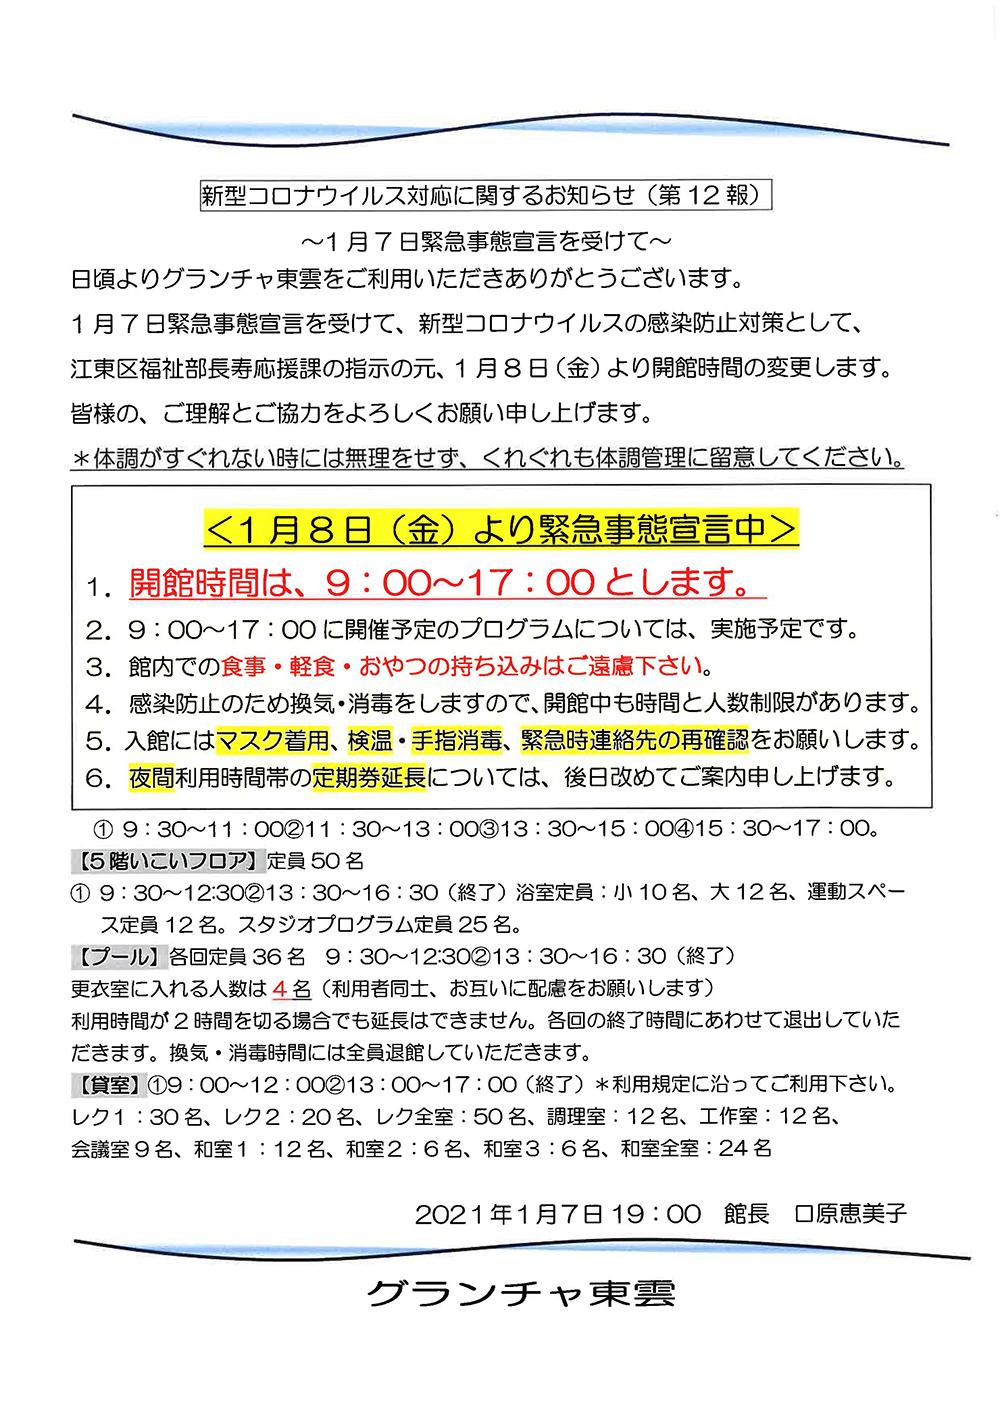 http://tokyo.ymca.or.jp/grancha/news_list/20210107grancha3.jpg